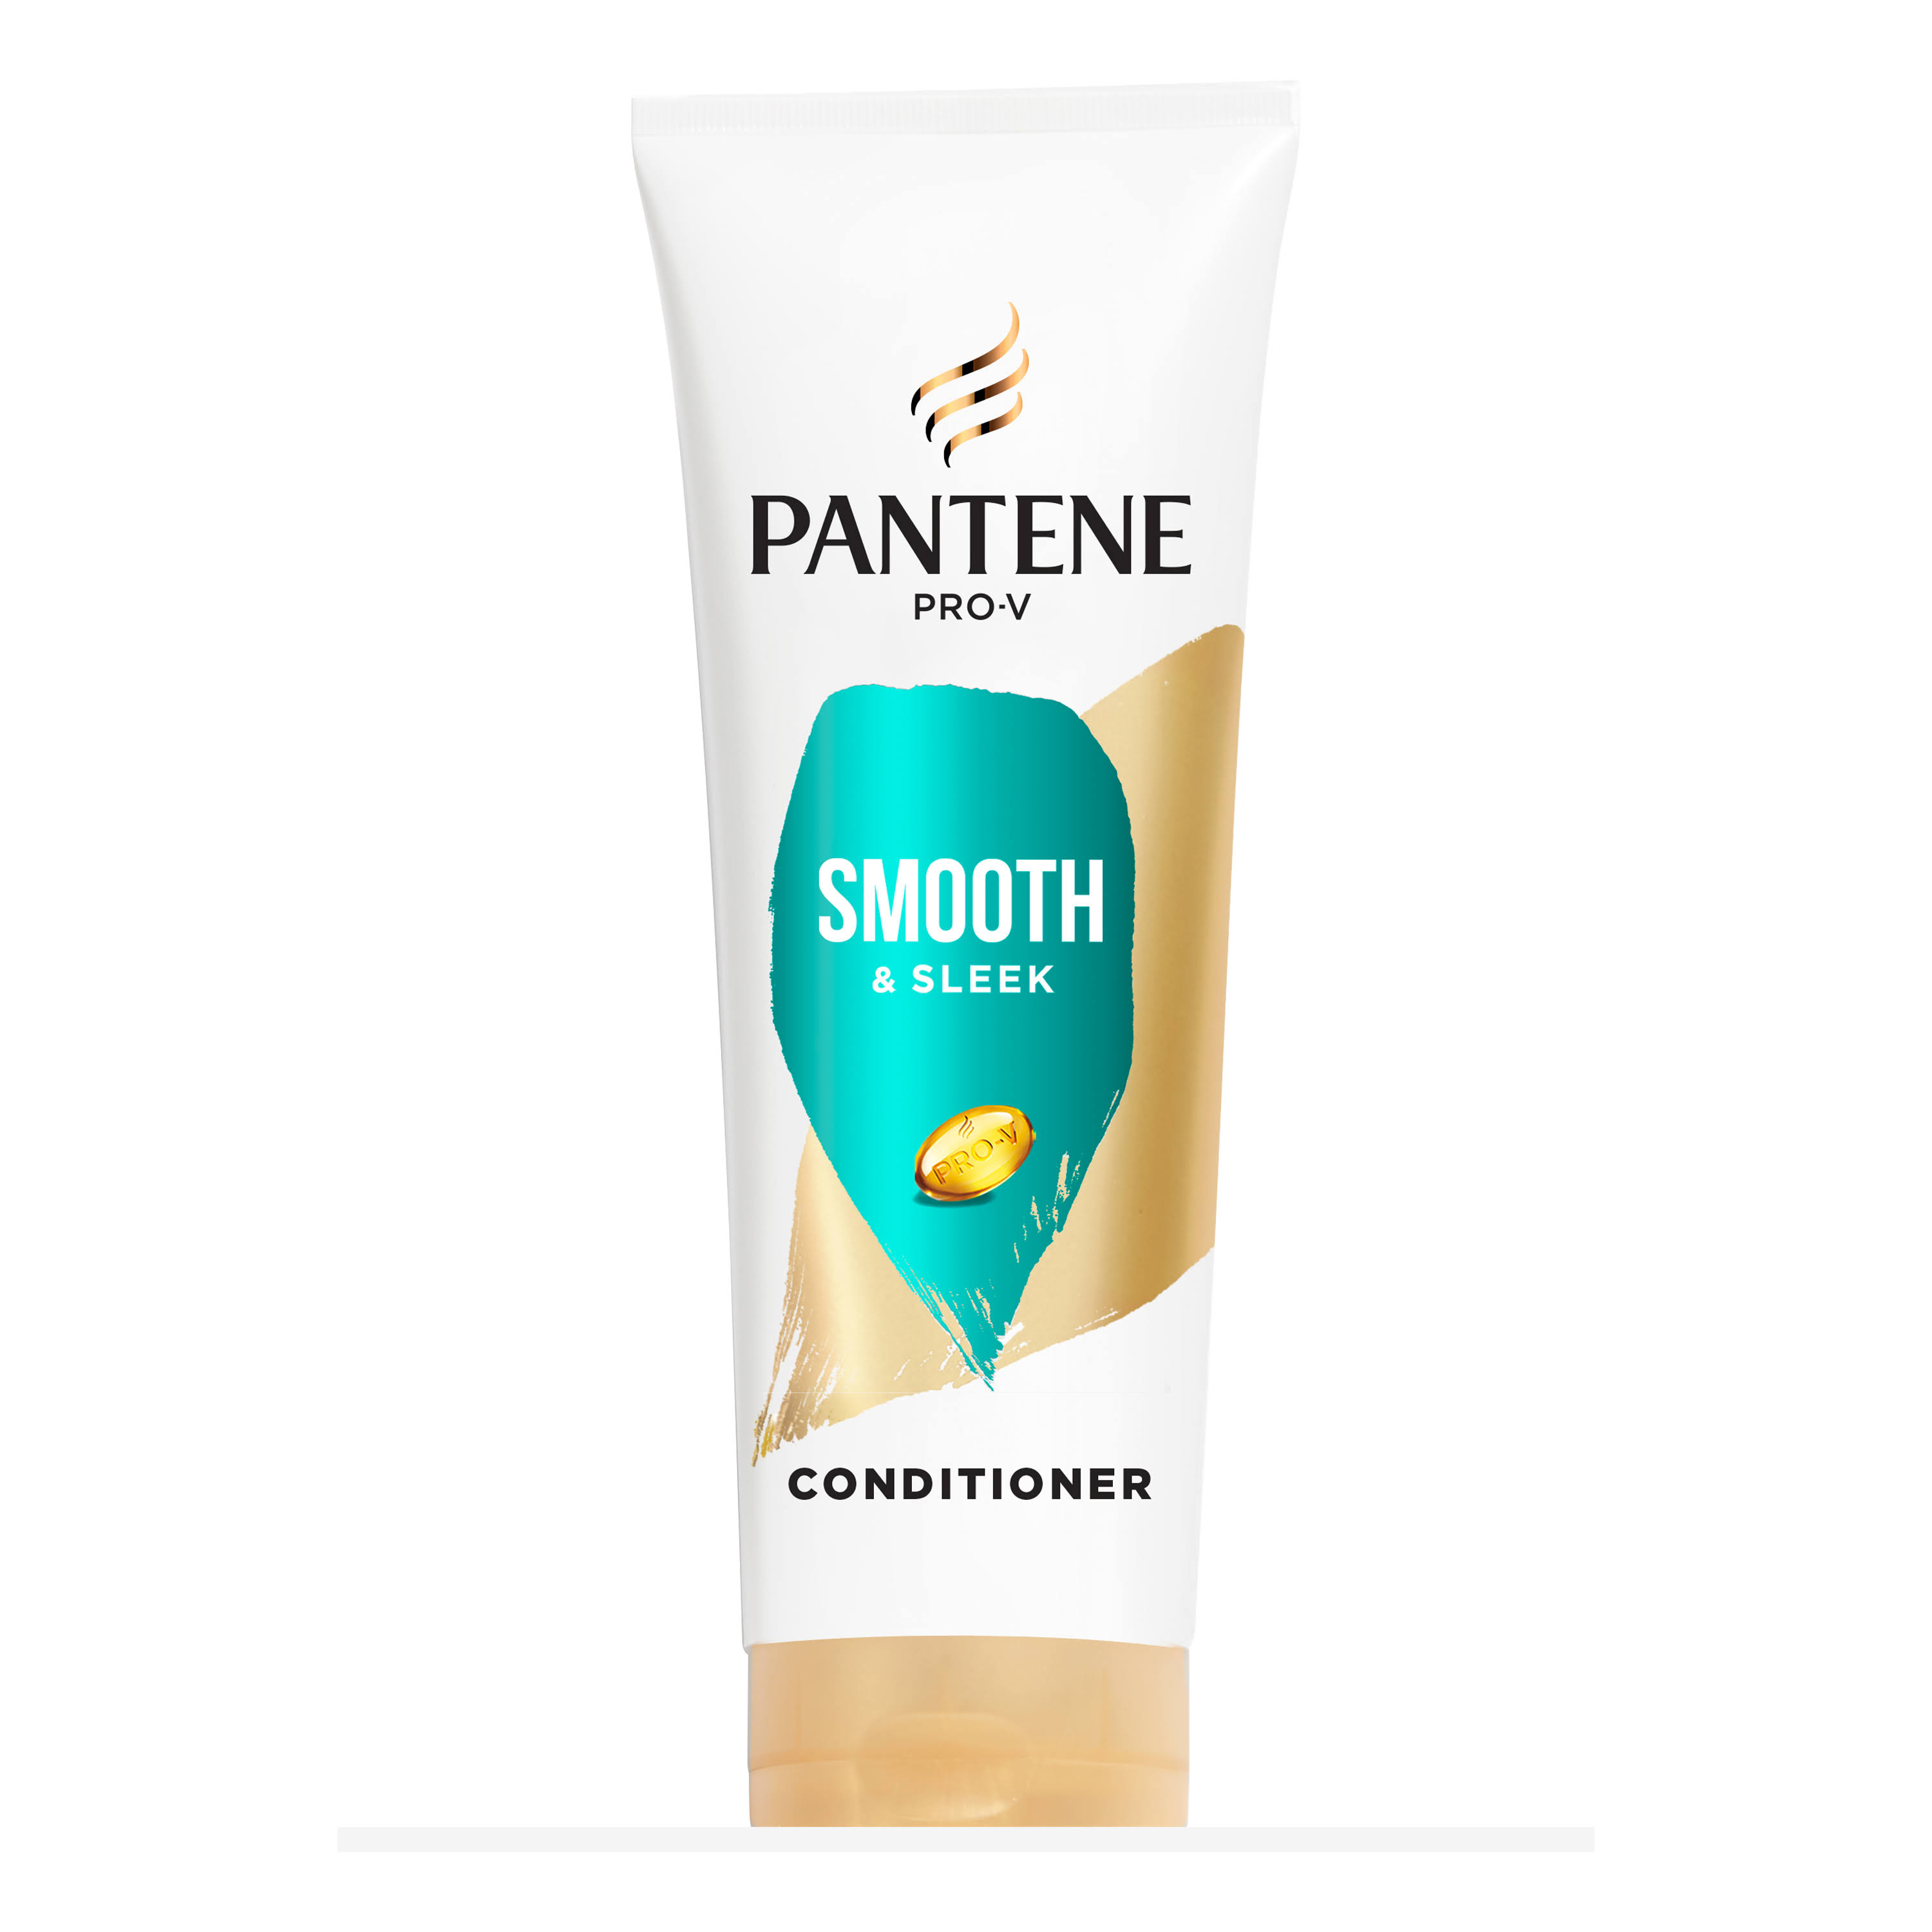 Pantene Pro-V Smooth & Sleek Conditioner, 10.4oz/308mL